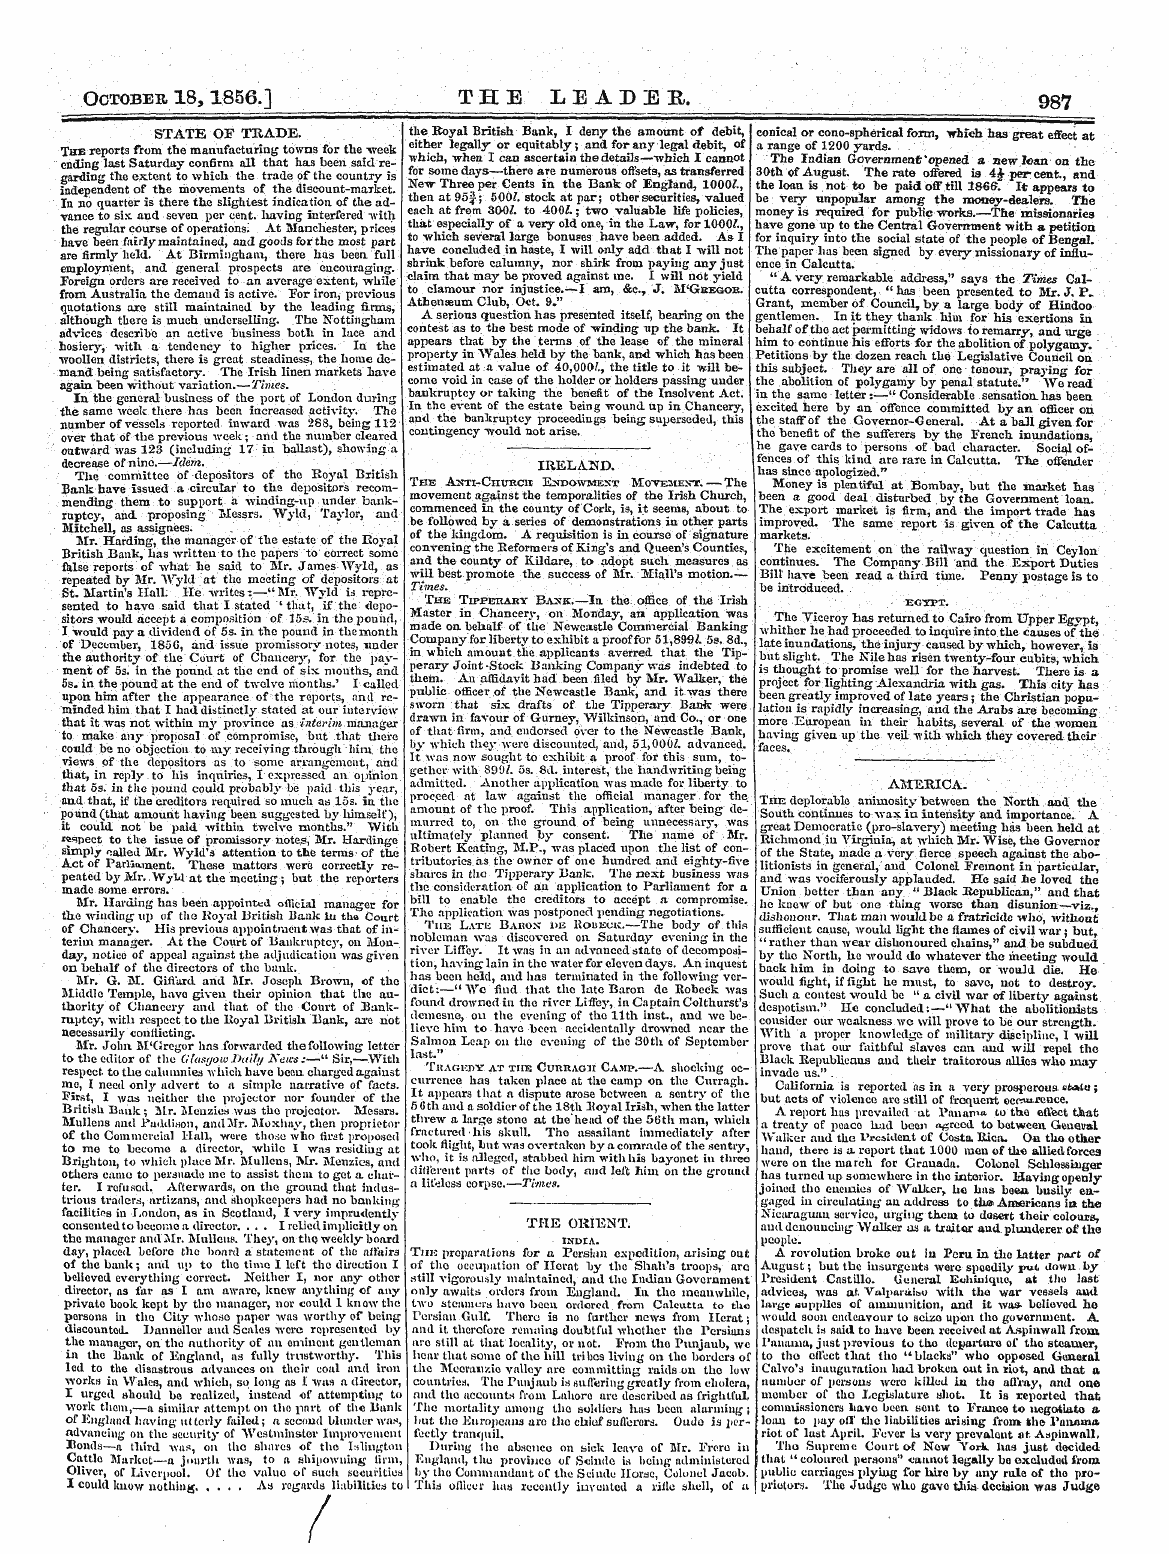 Leader (1850-1860): jS F Y, 2nd edition - Ireland. The Anti-Church Endowment Movem...